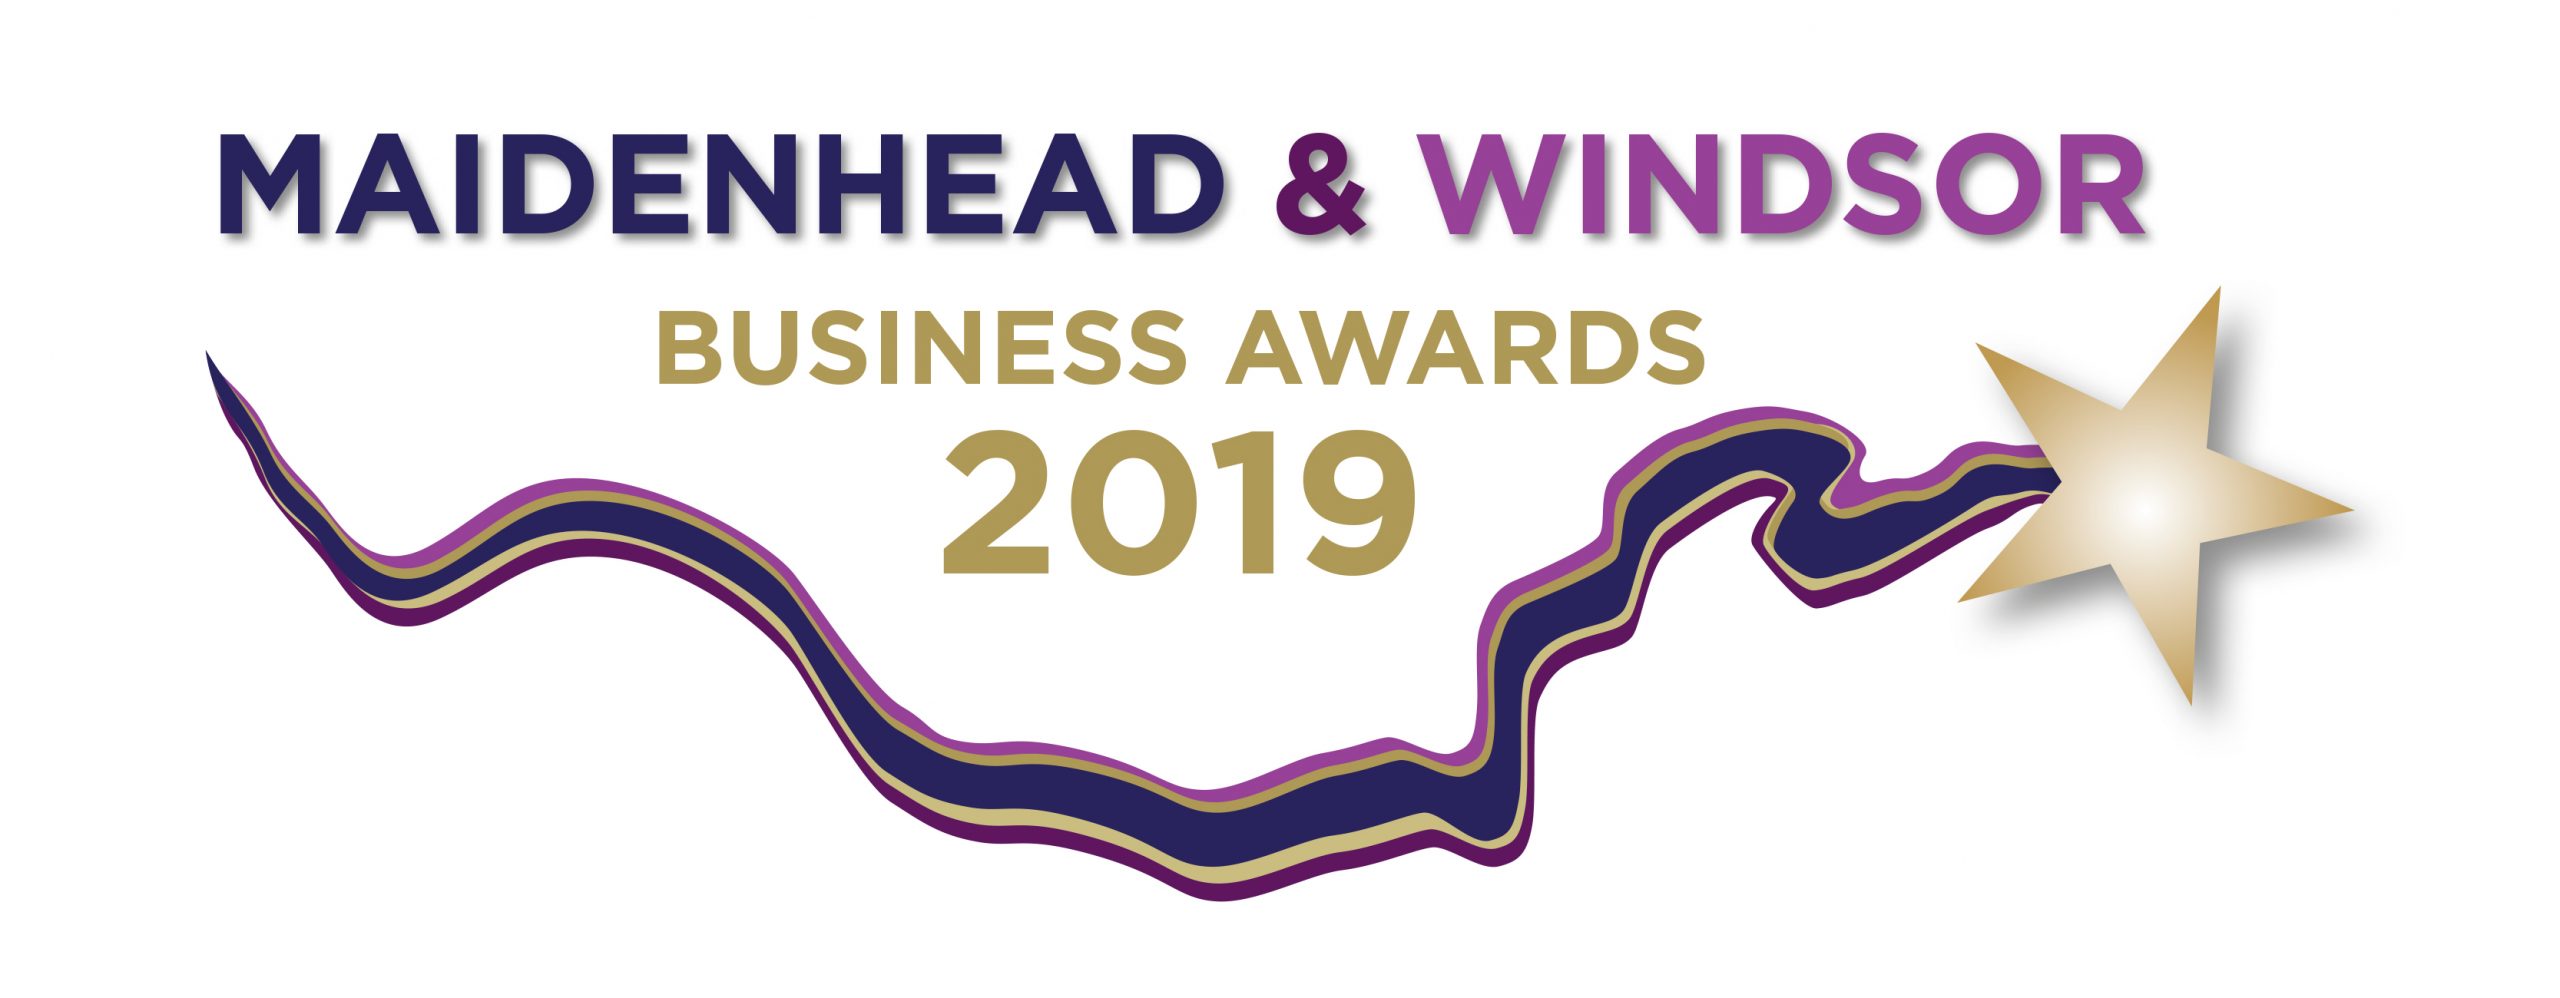 Maidenhead and Windsor Business Awards 2019 Sponsor